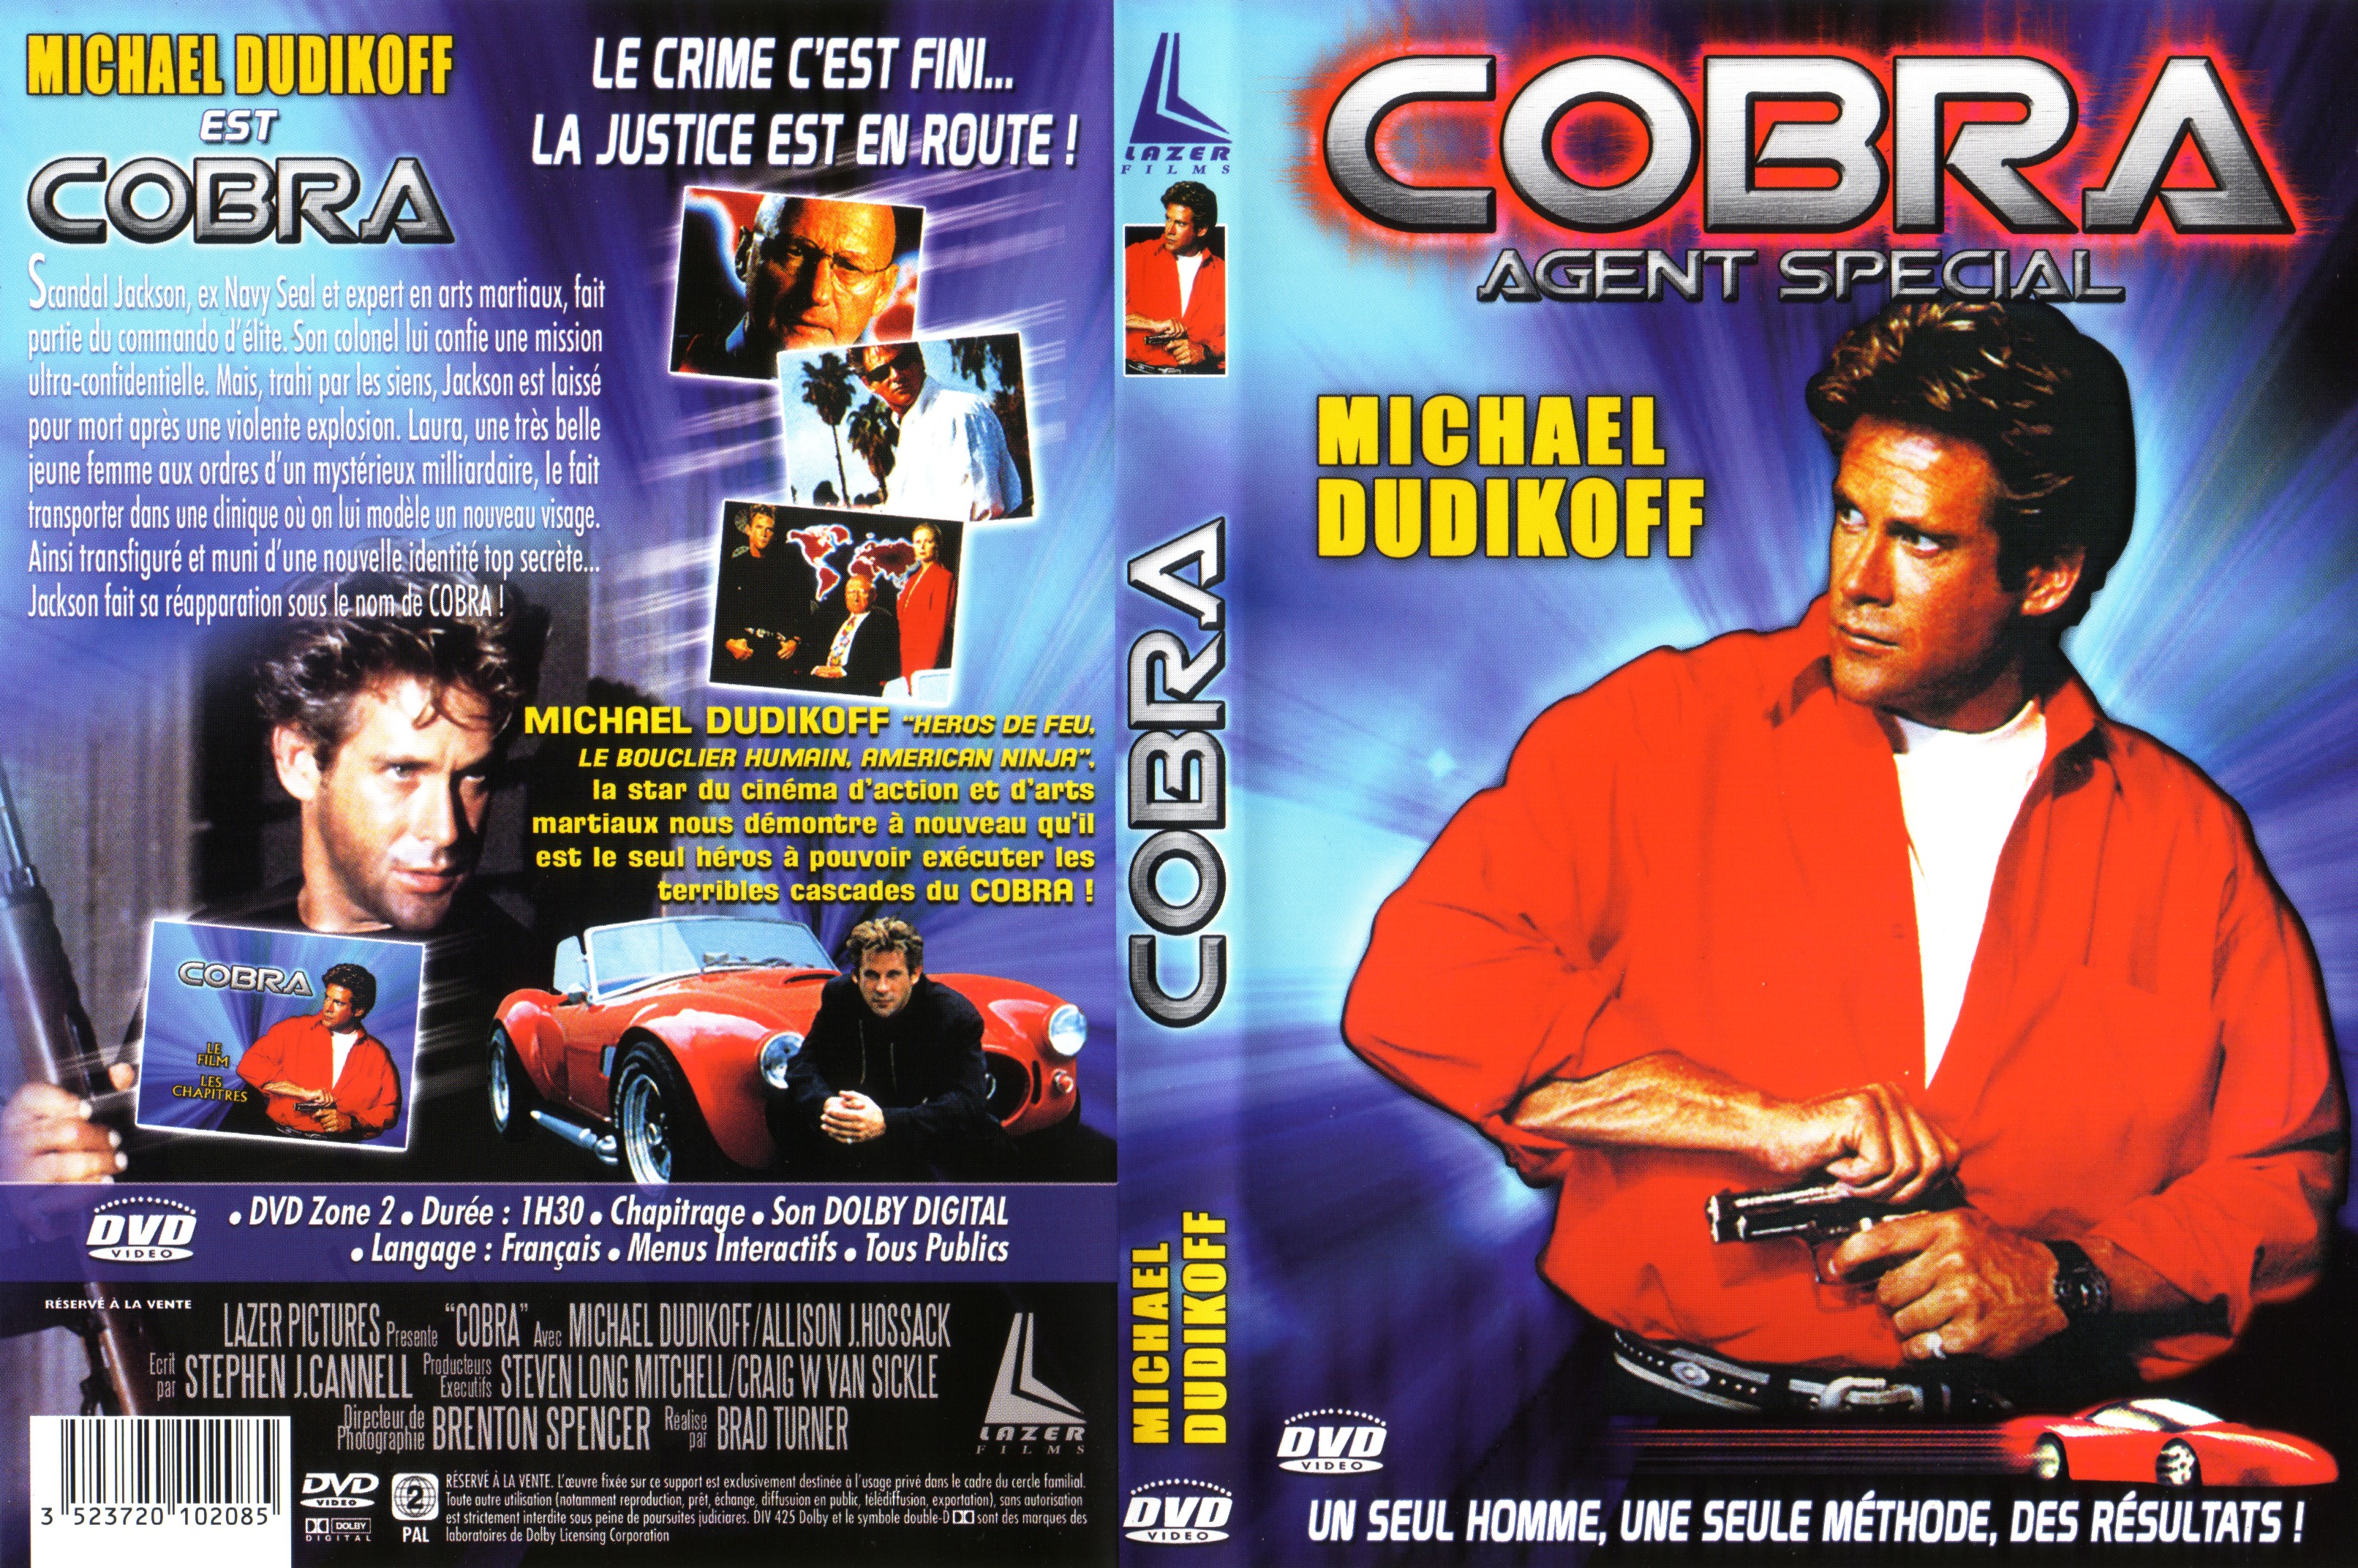 Jaquette DVD Cobra agent special